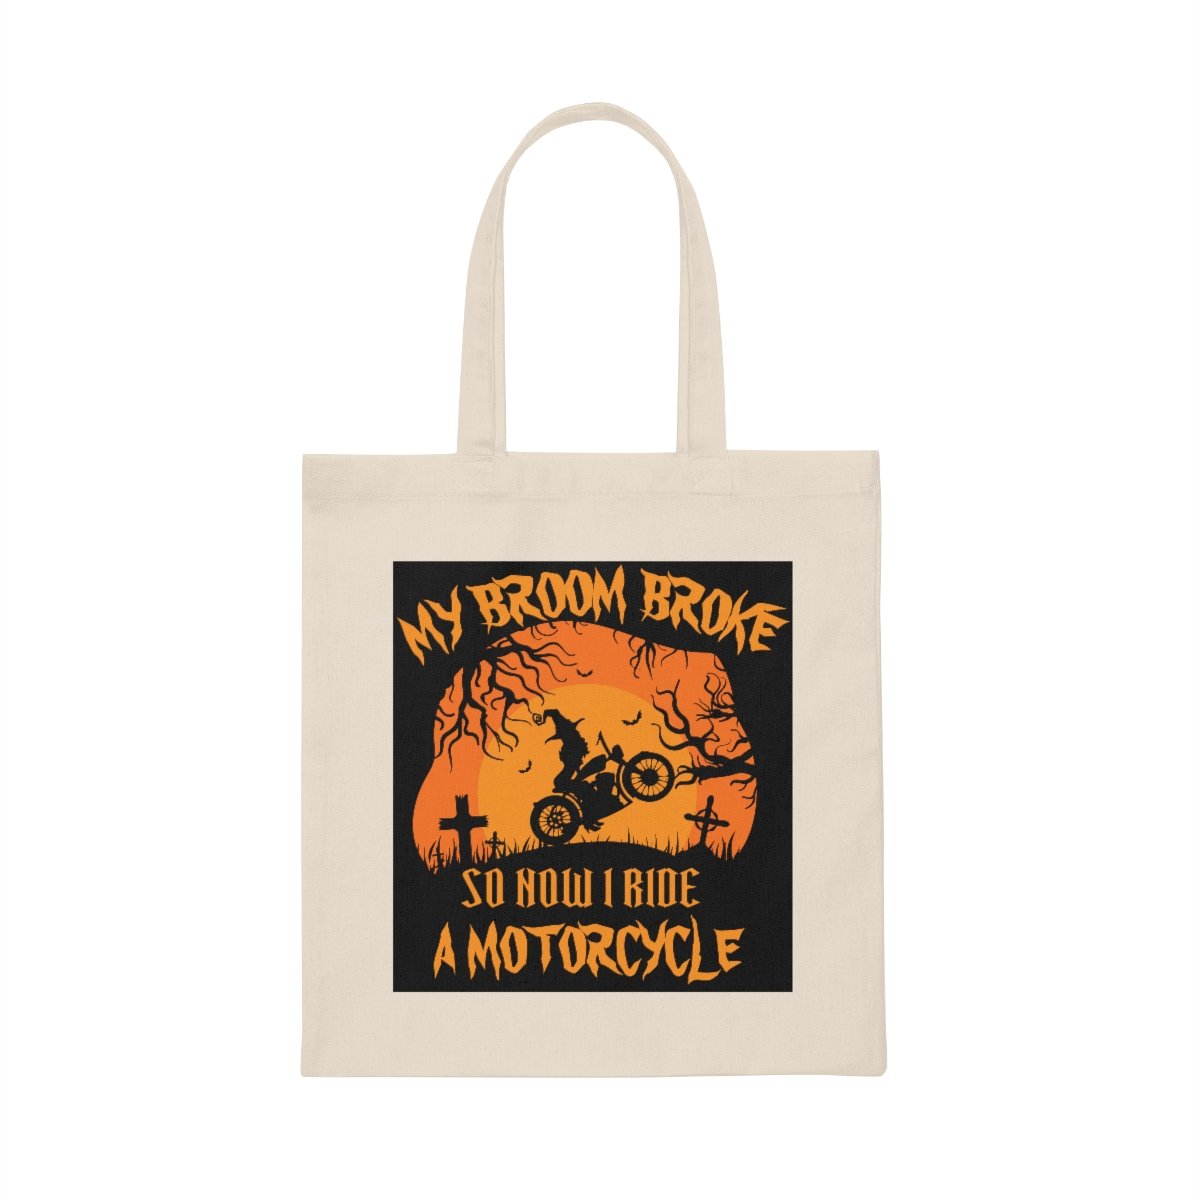 My Broom Broke So I Ride A Motorcycle - Canvas Tote Bag - Halloween Gift Or Treat Bag